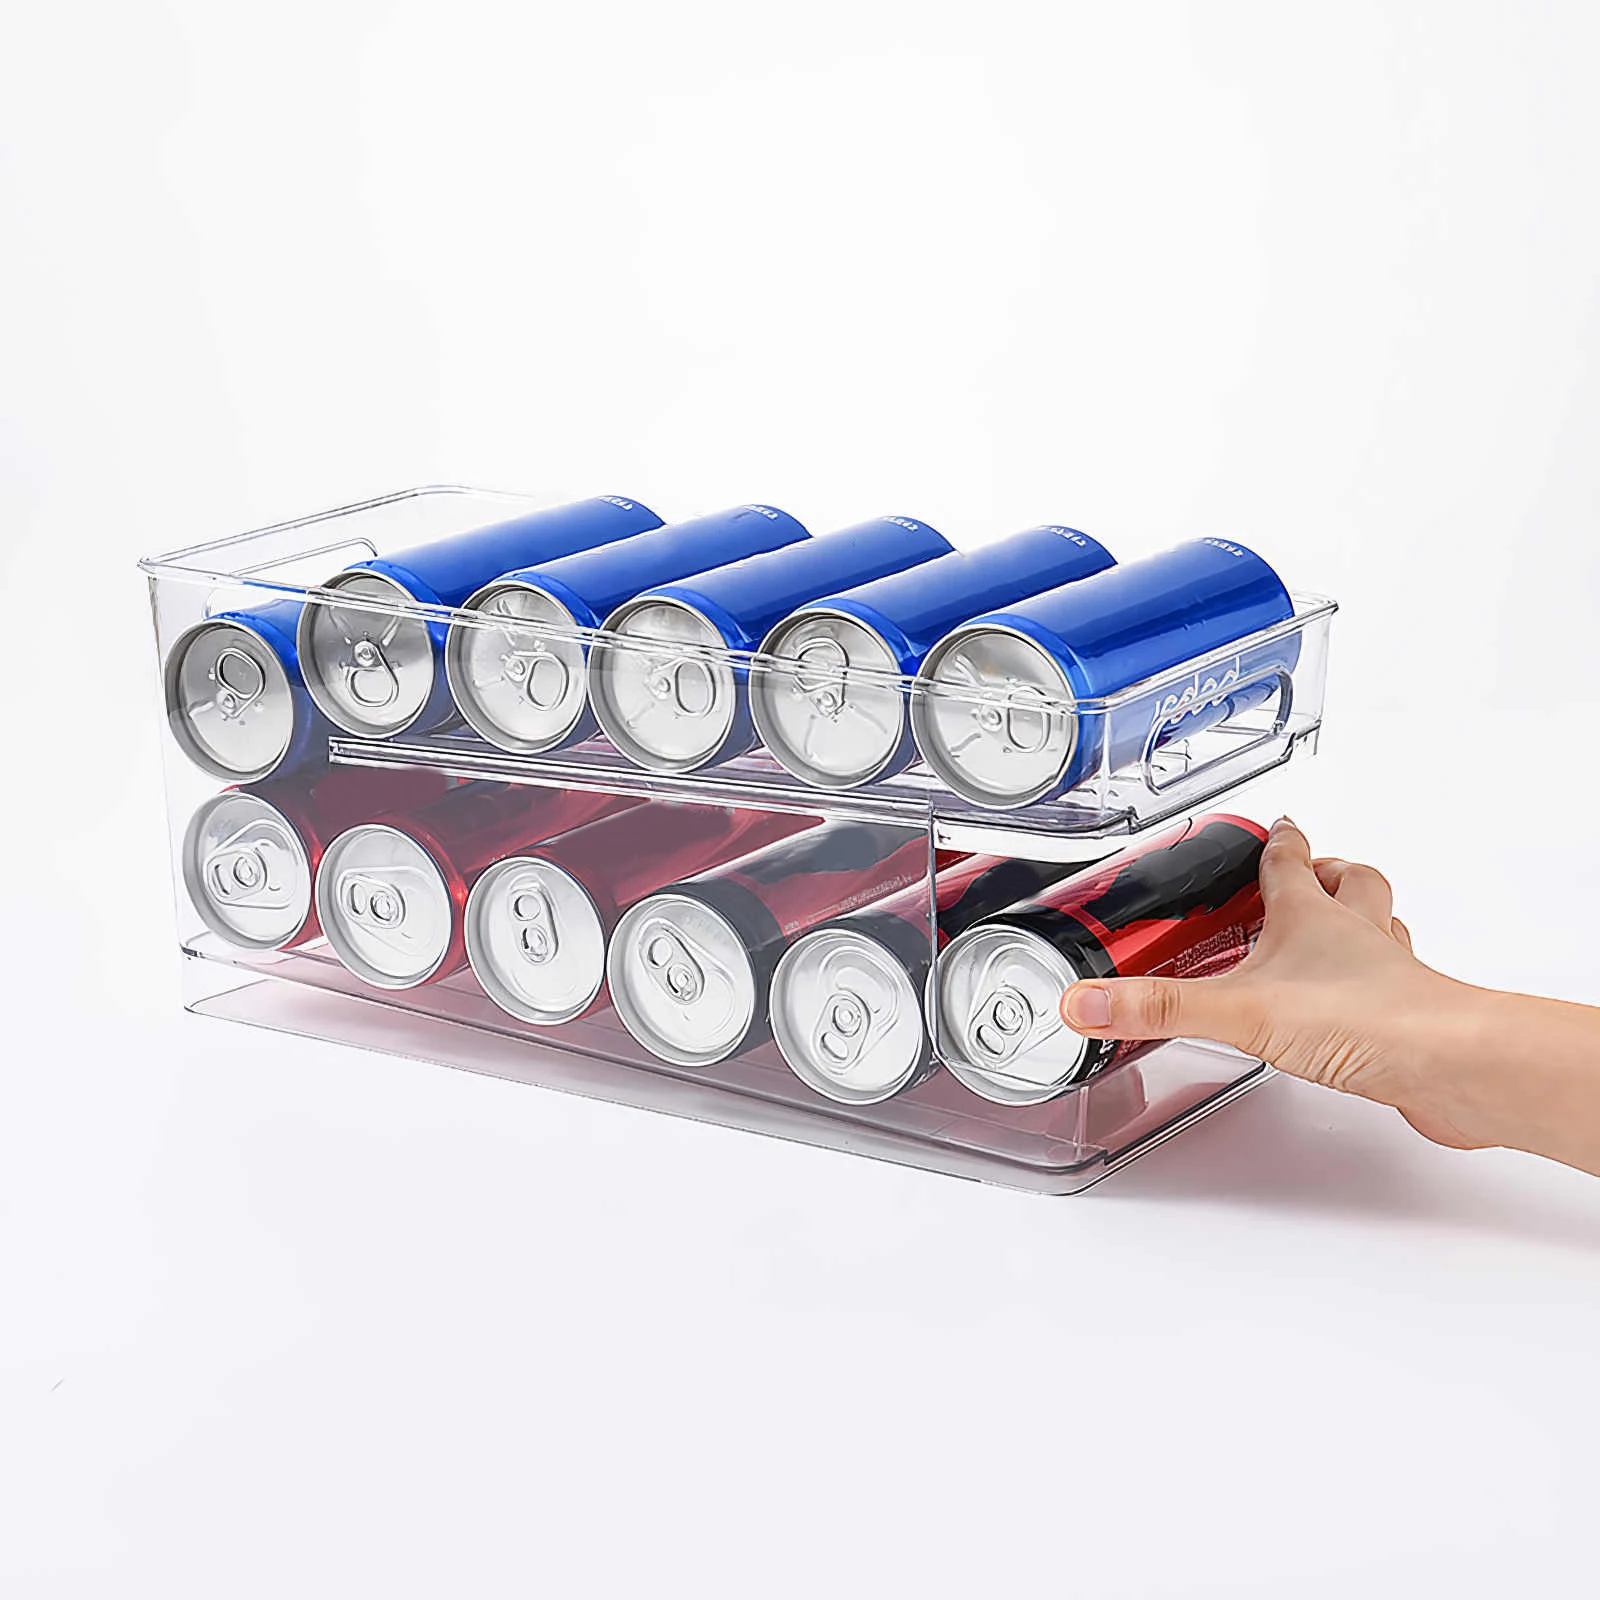 Organizador de latas de soda para refrigerador, dispensador automático  ampliado de 2 capas para refrigerador, caja de almacenamiento de latas de